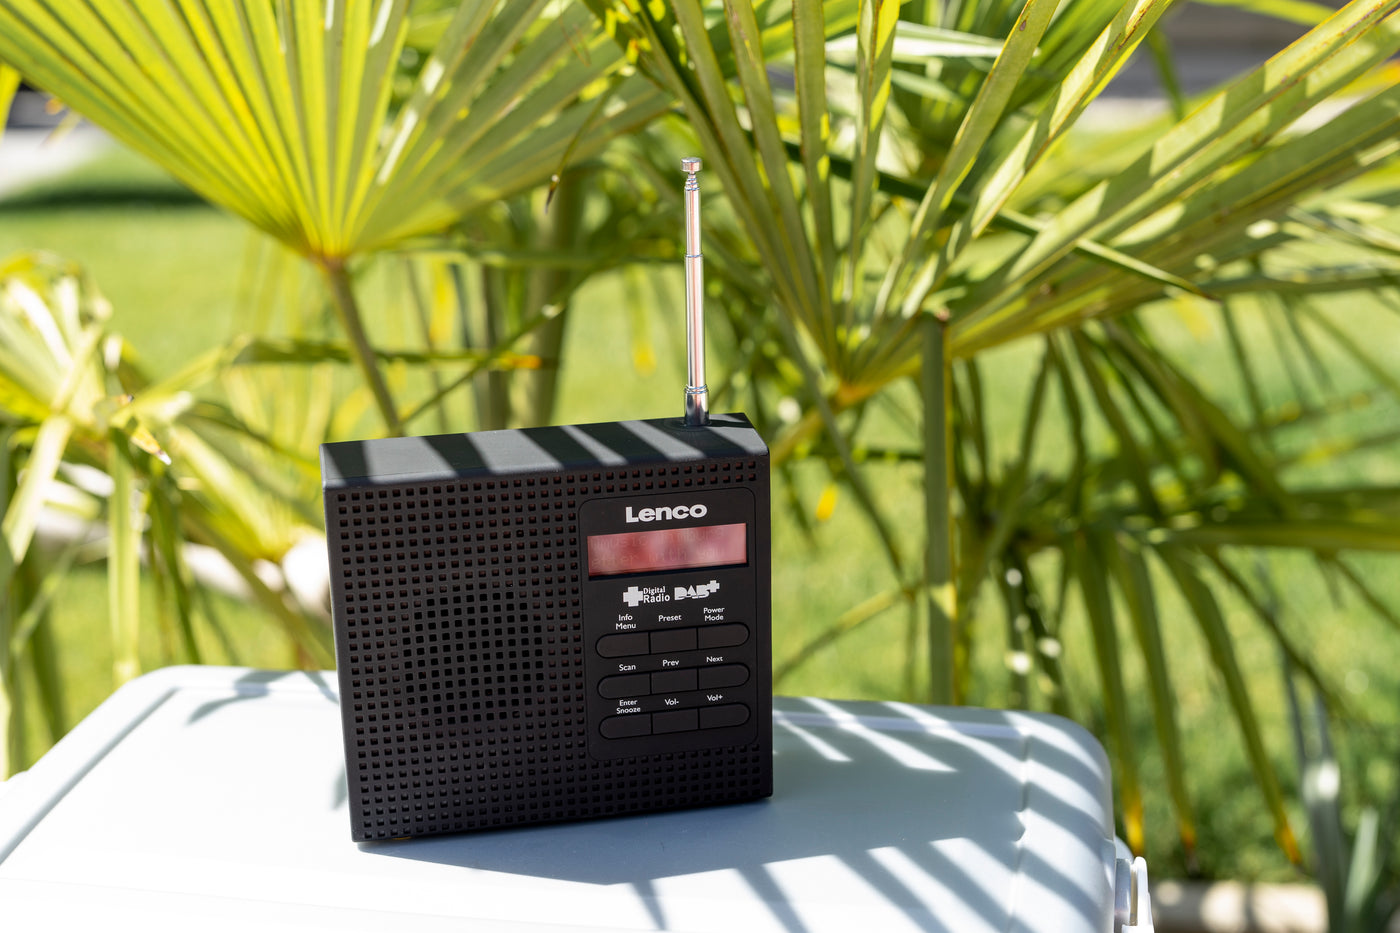 LENCO PDR-020BK - Portable radio DAB+ FM radio with alarm function - Black